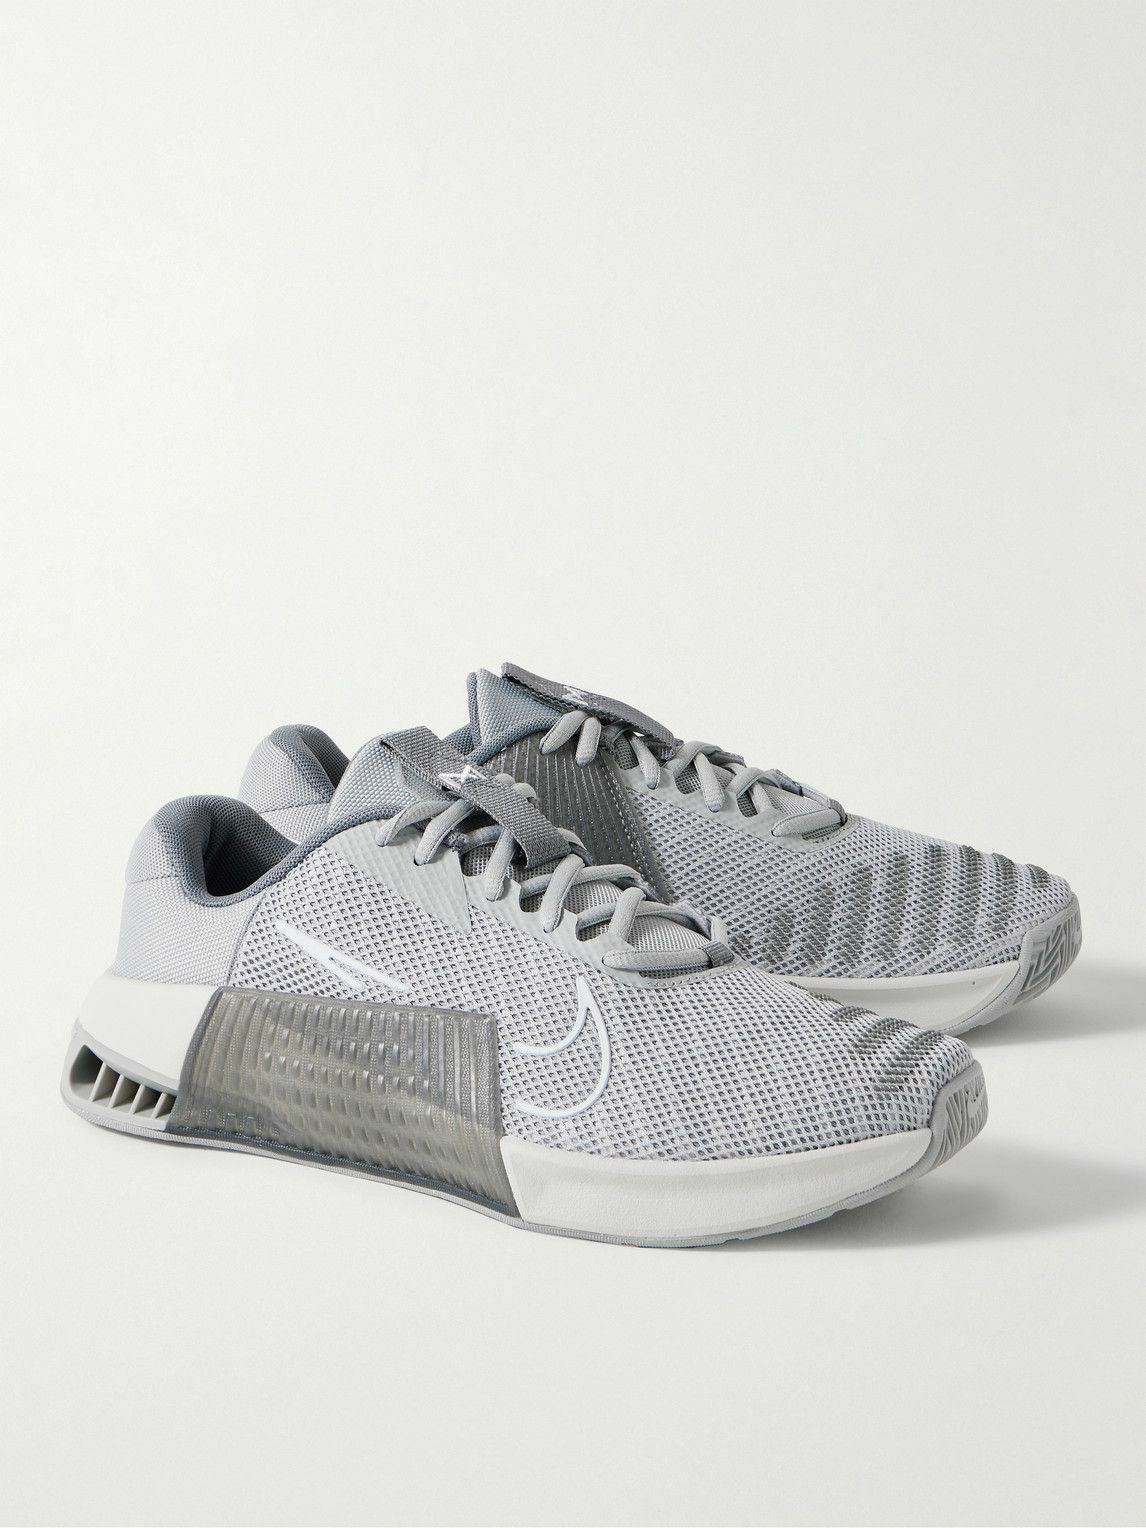 Nike Metcon 9 sneakers in triple gray